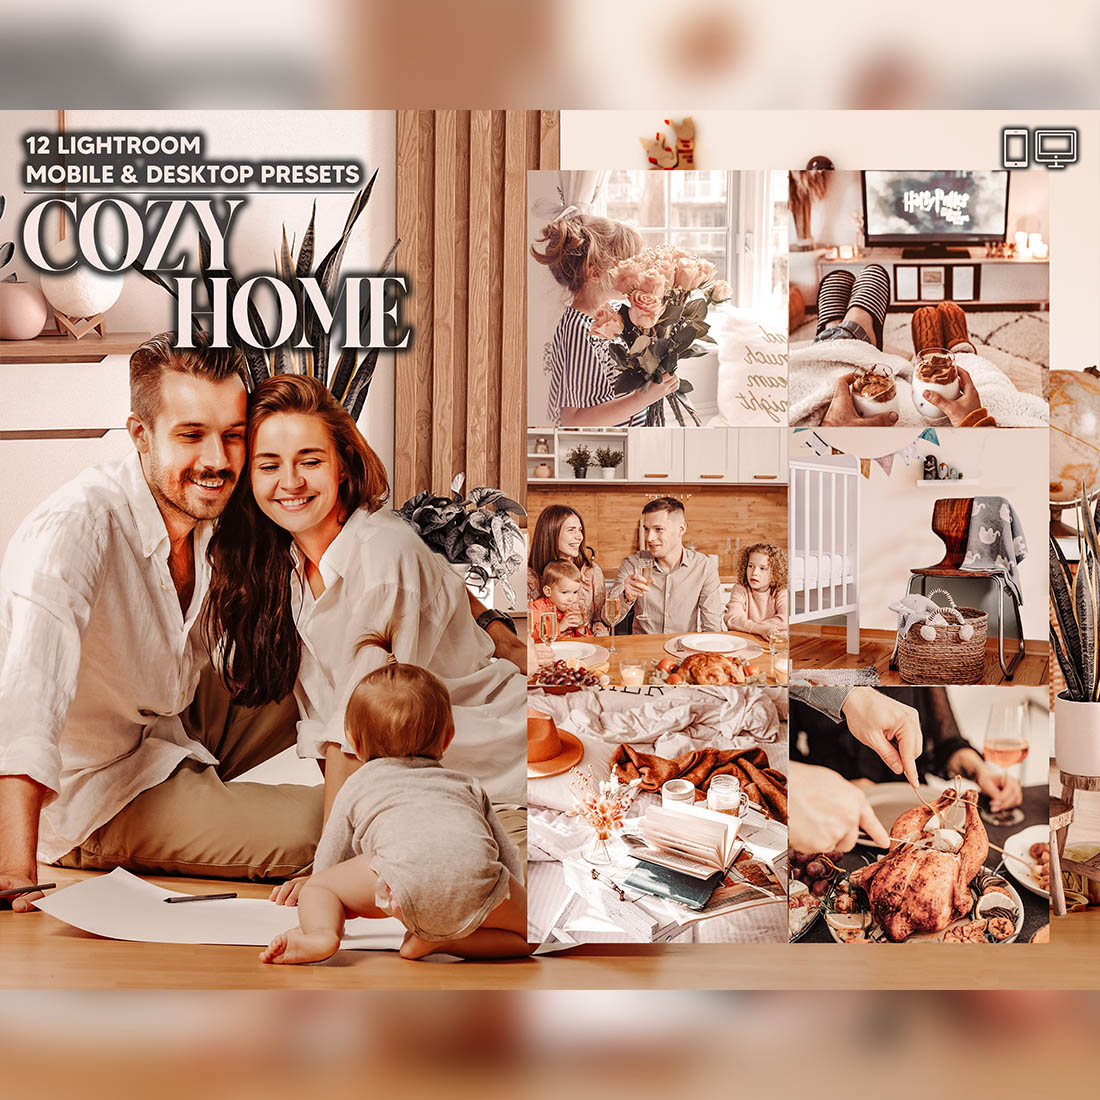 12 Cozy Home Lightroom Presets, Family Time Mobile Preset, Warm Indoor Desktop, Lifestyle Portrait Theme For Instagram LR Filter DNG Autumn cover image.